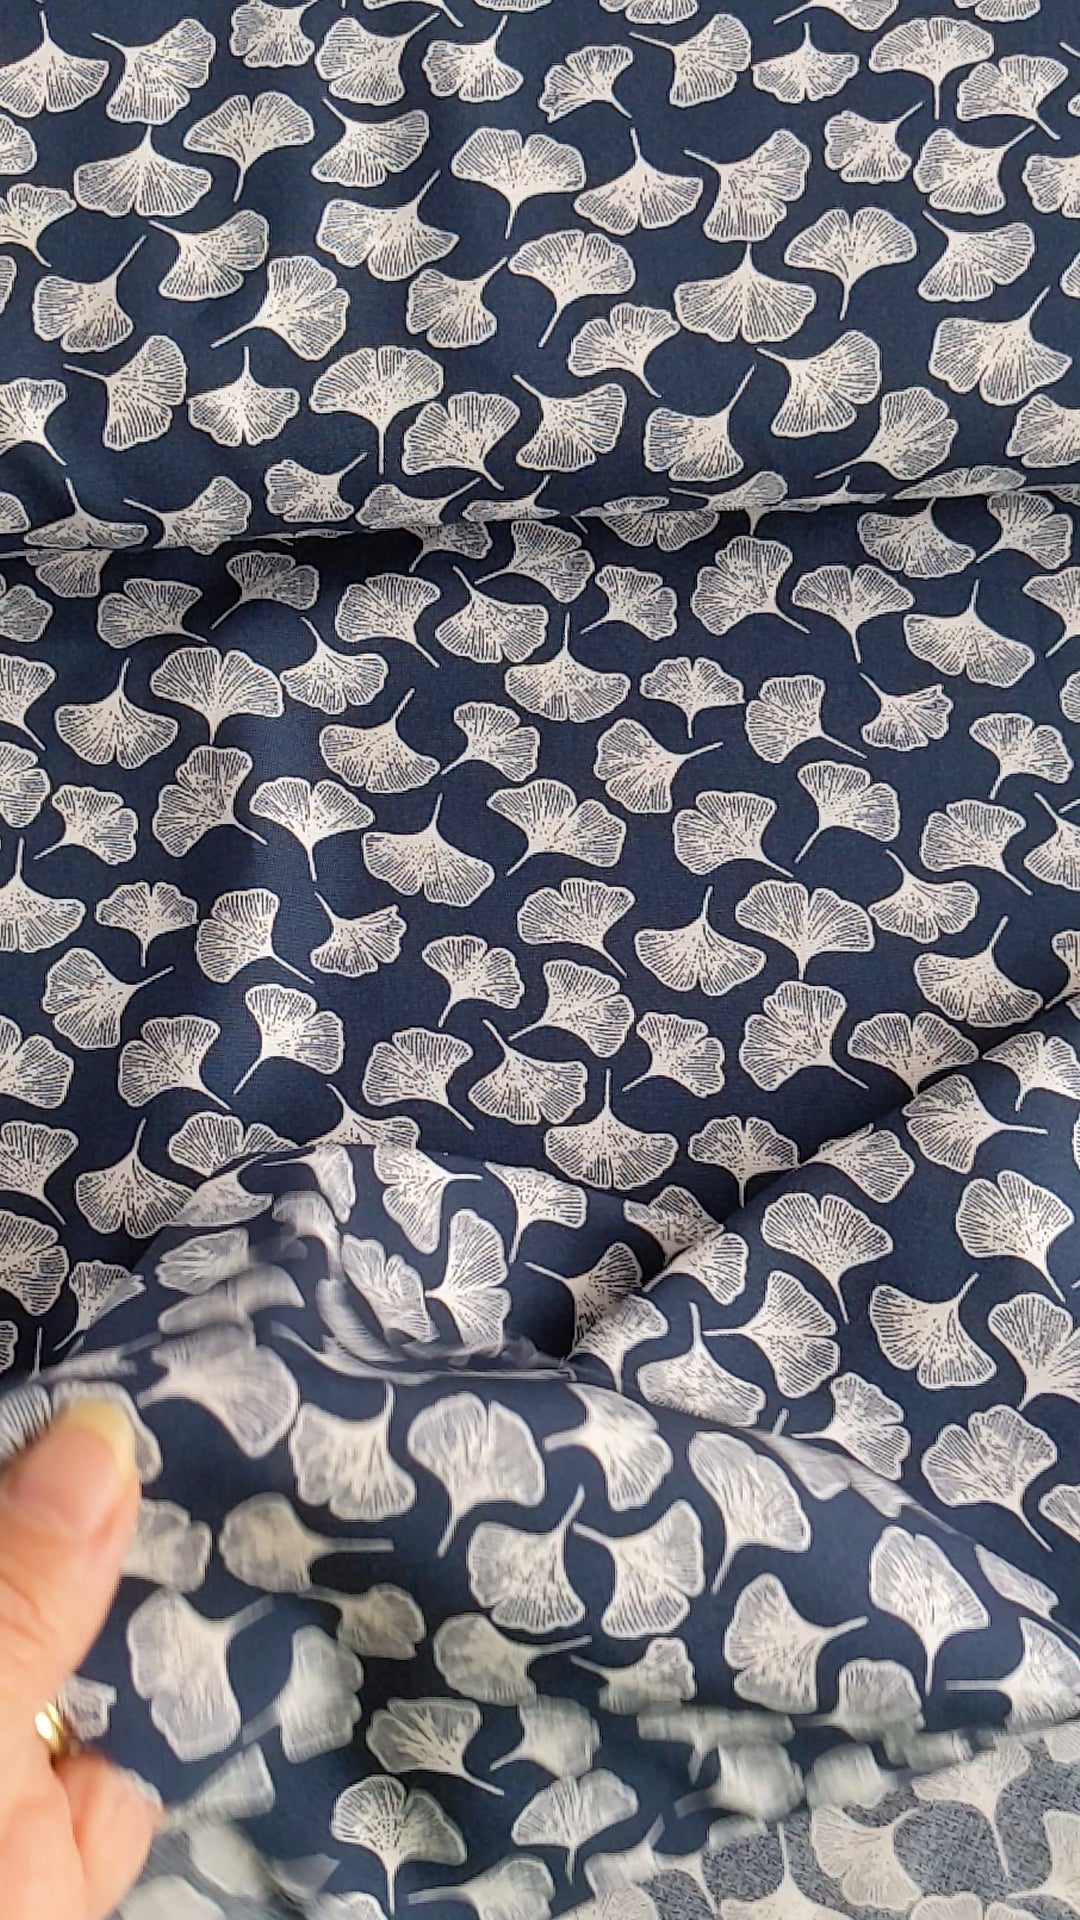 Petals on navy ananda viscose fabric